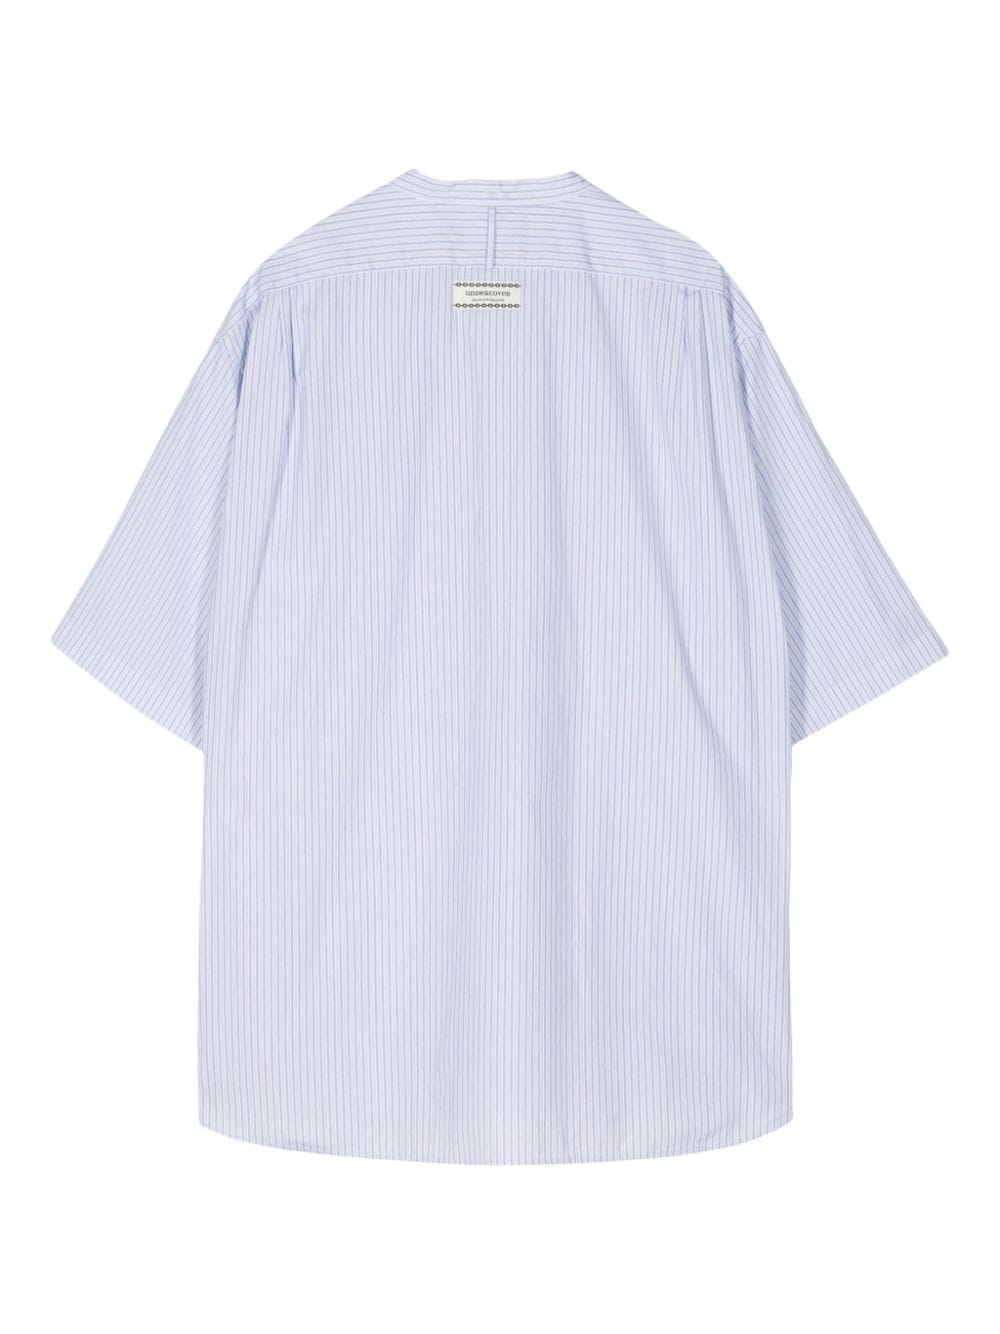 Undercover striped cotton shirt - Blauw